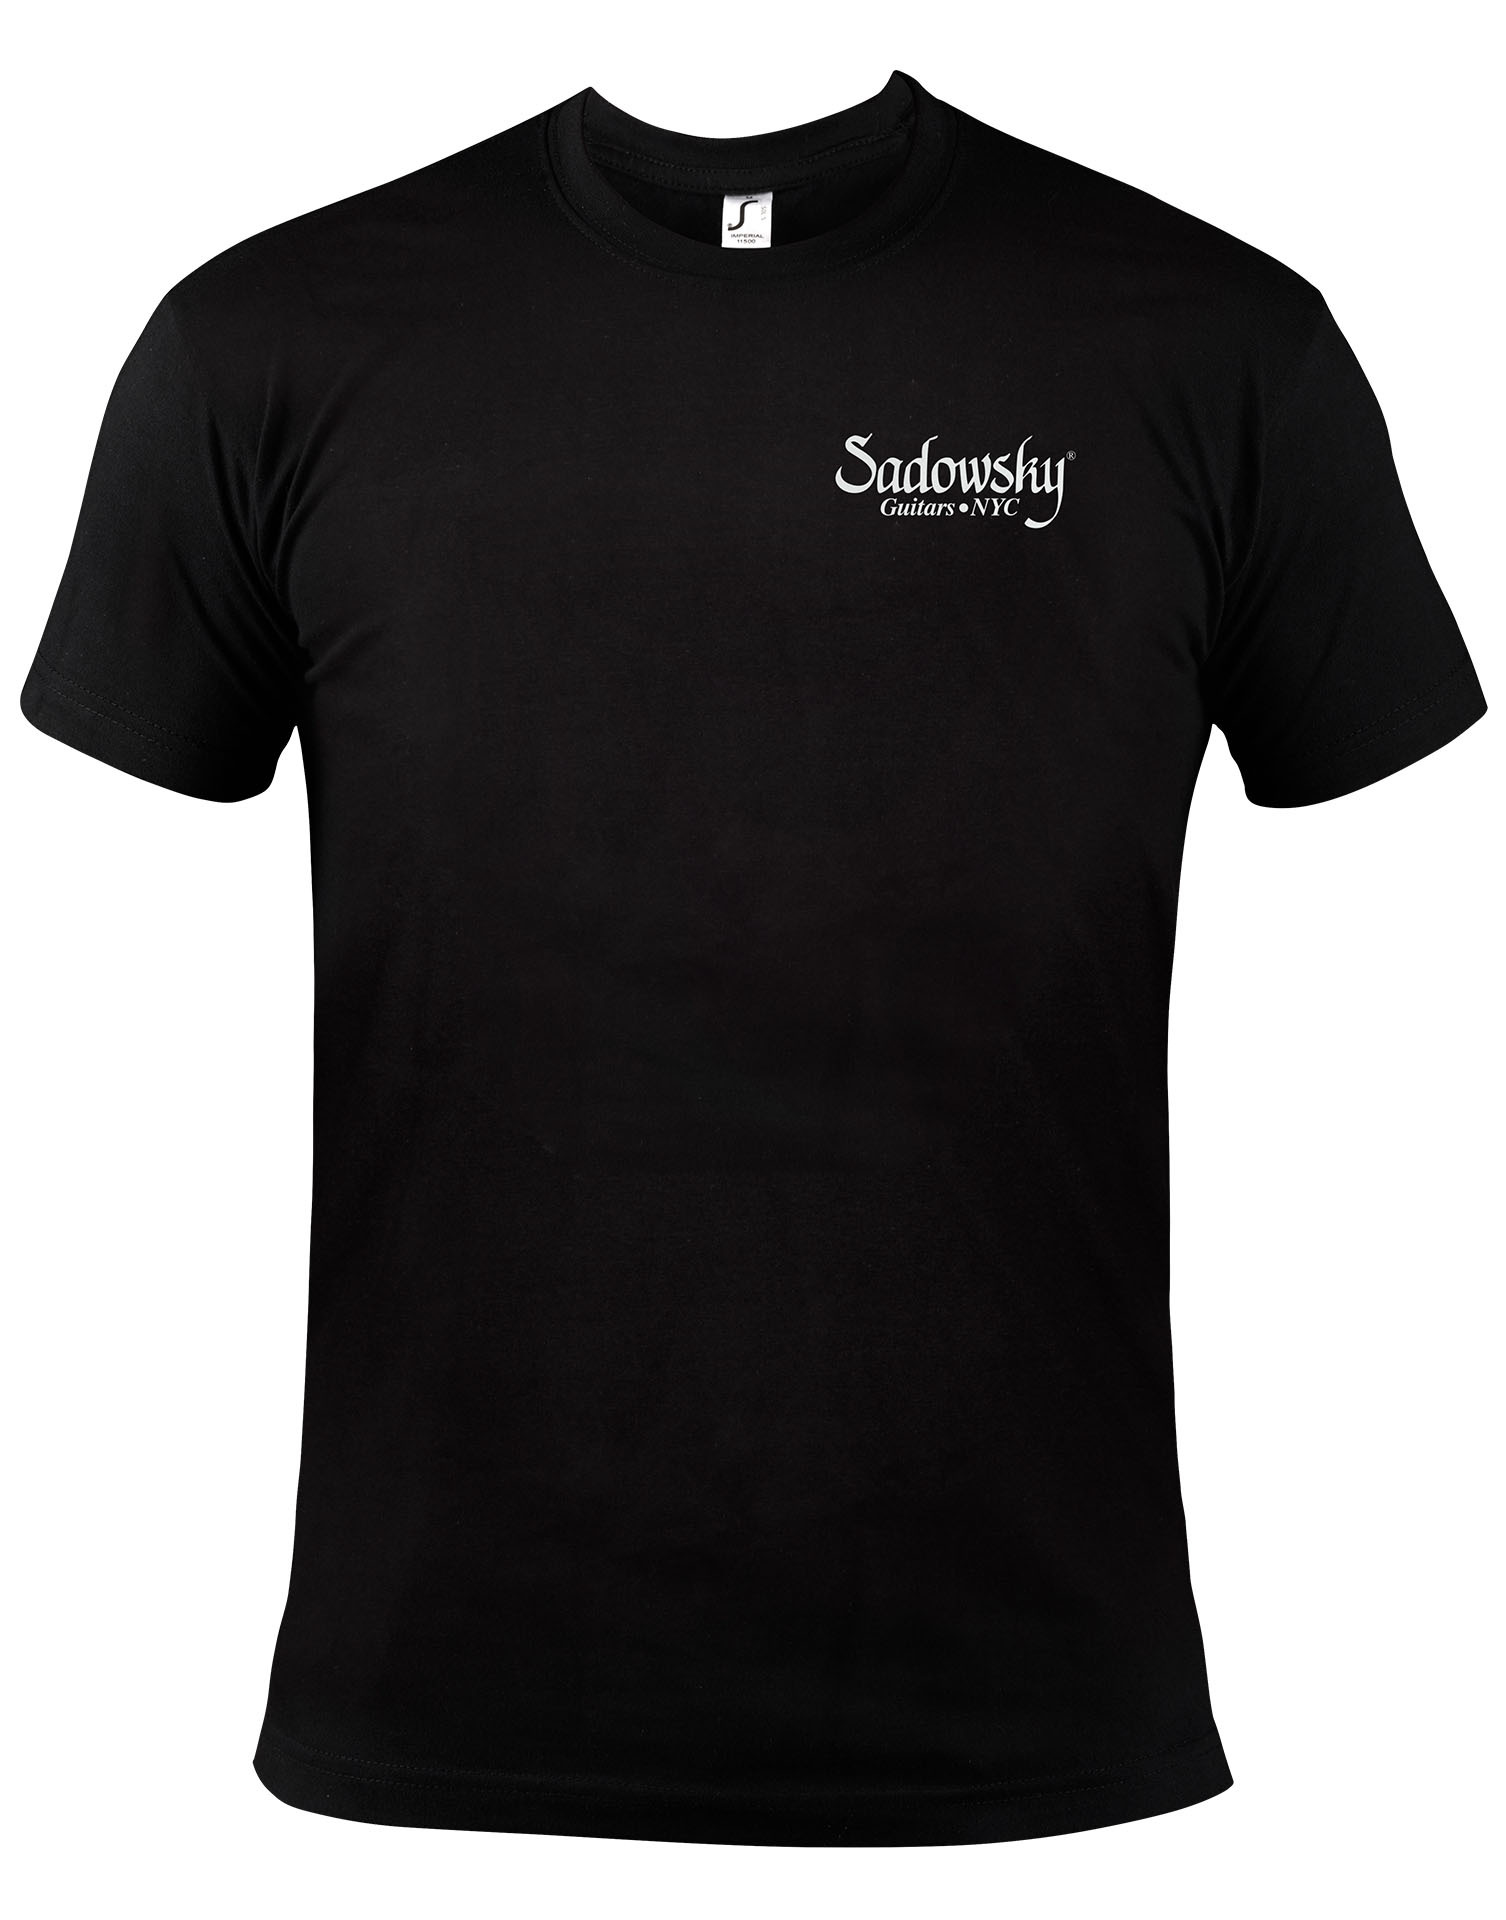 Sadowsky Promo - Logo T-Shirt, Black with White Print - Size XL